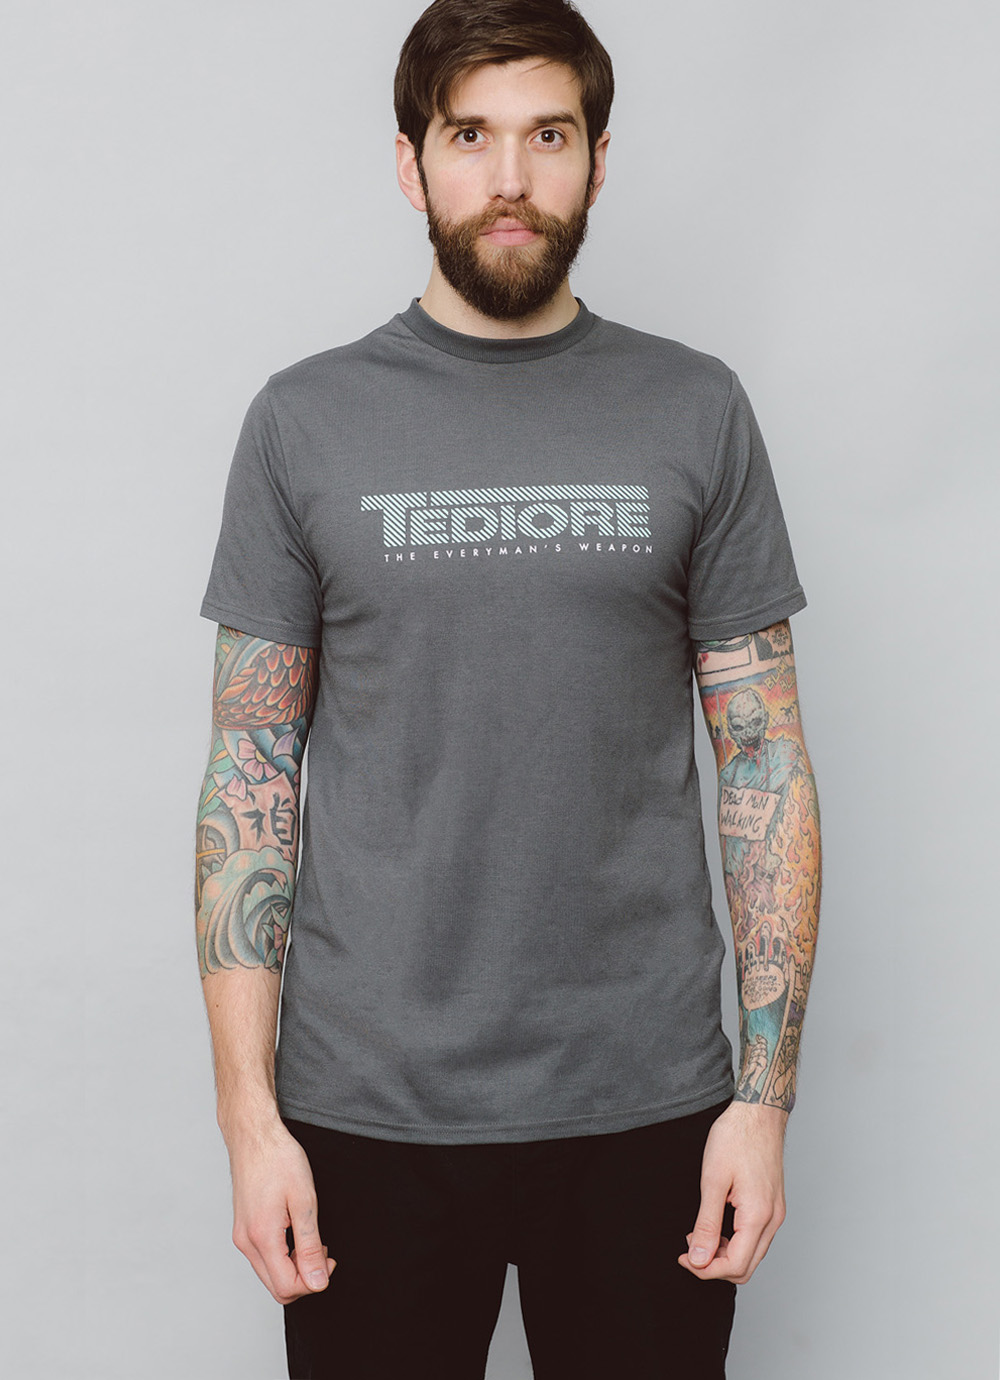 Borderlands Tediore T-Shirt - Insert Coin Clothing